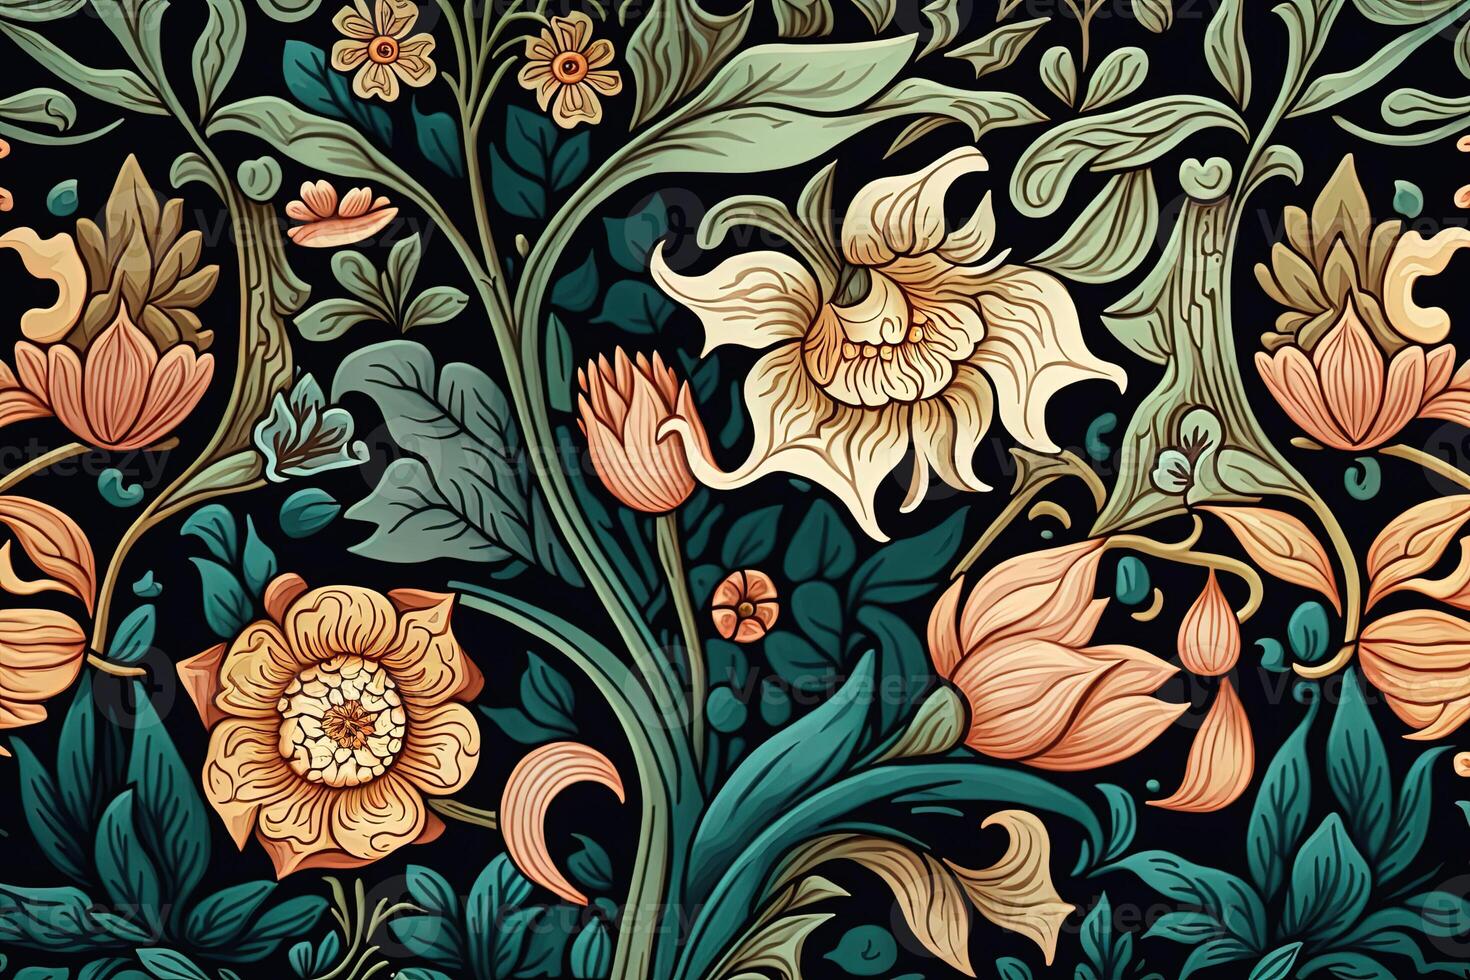 generativo ai, floral vistoso modelo. Guillermo morris inspirado natural plantas y flores fondo, Clásico ilustración. follaje ornamento. foto